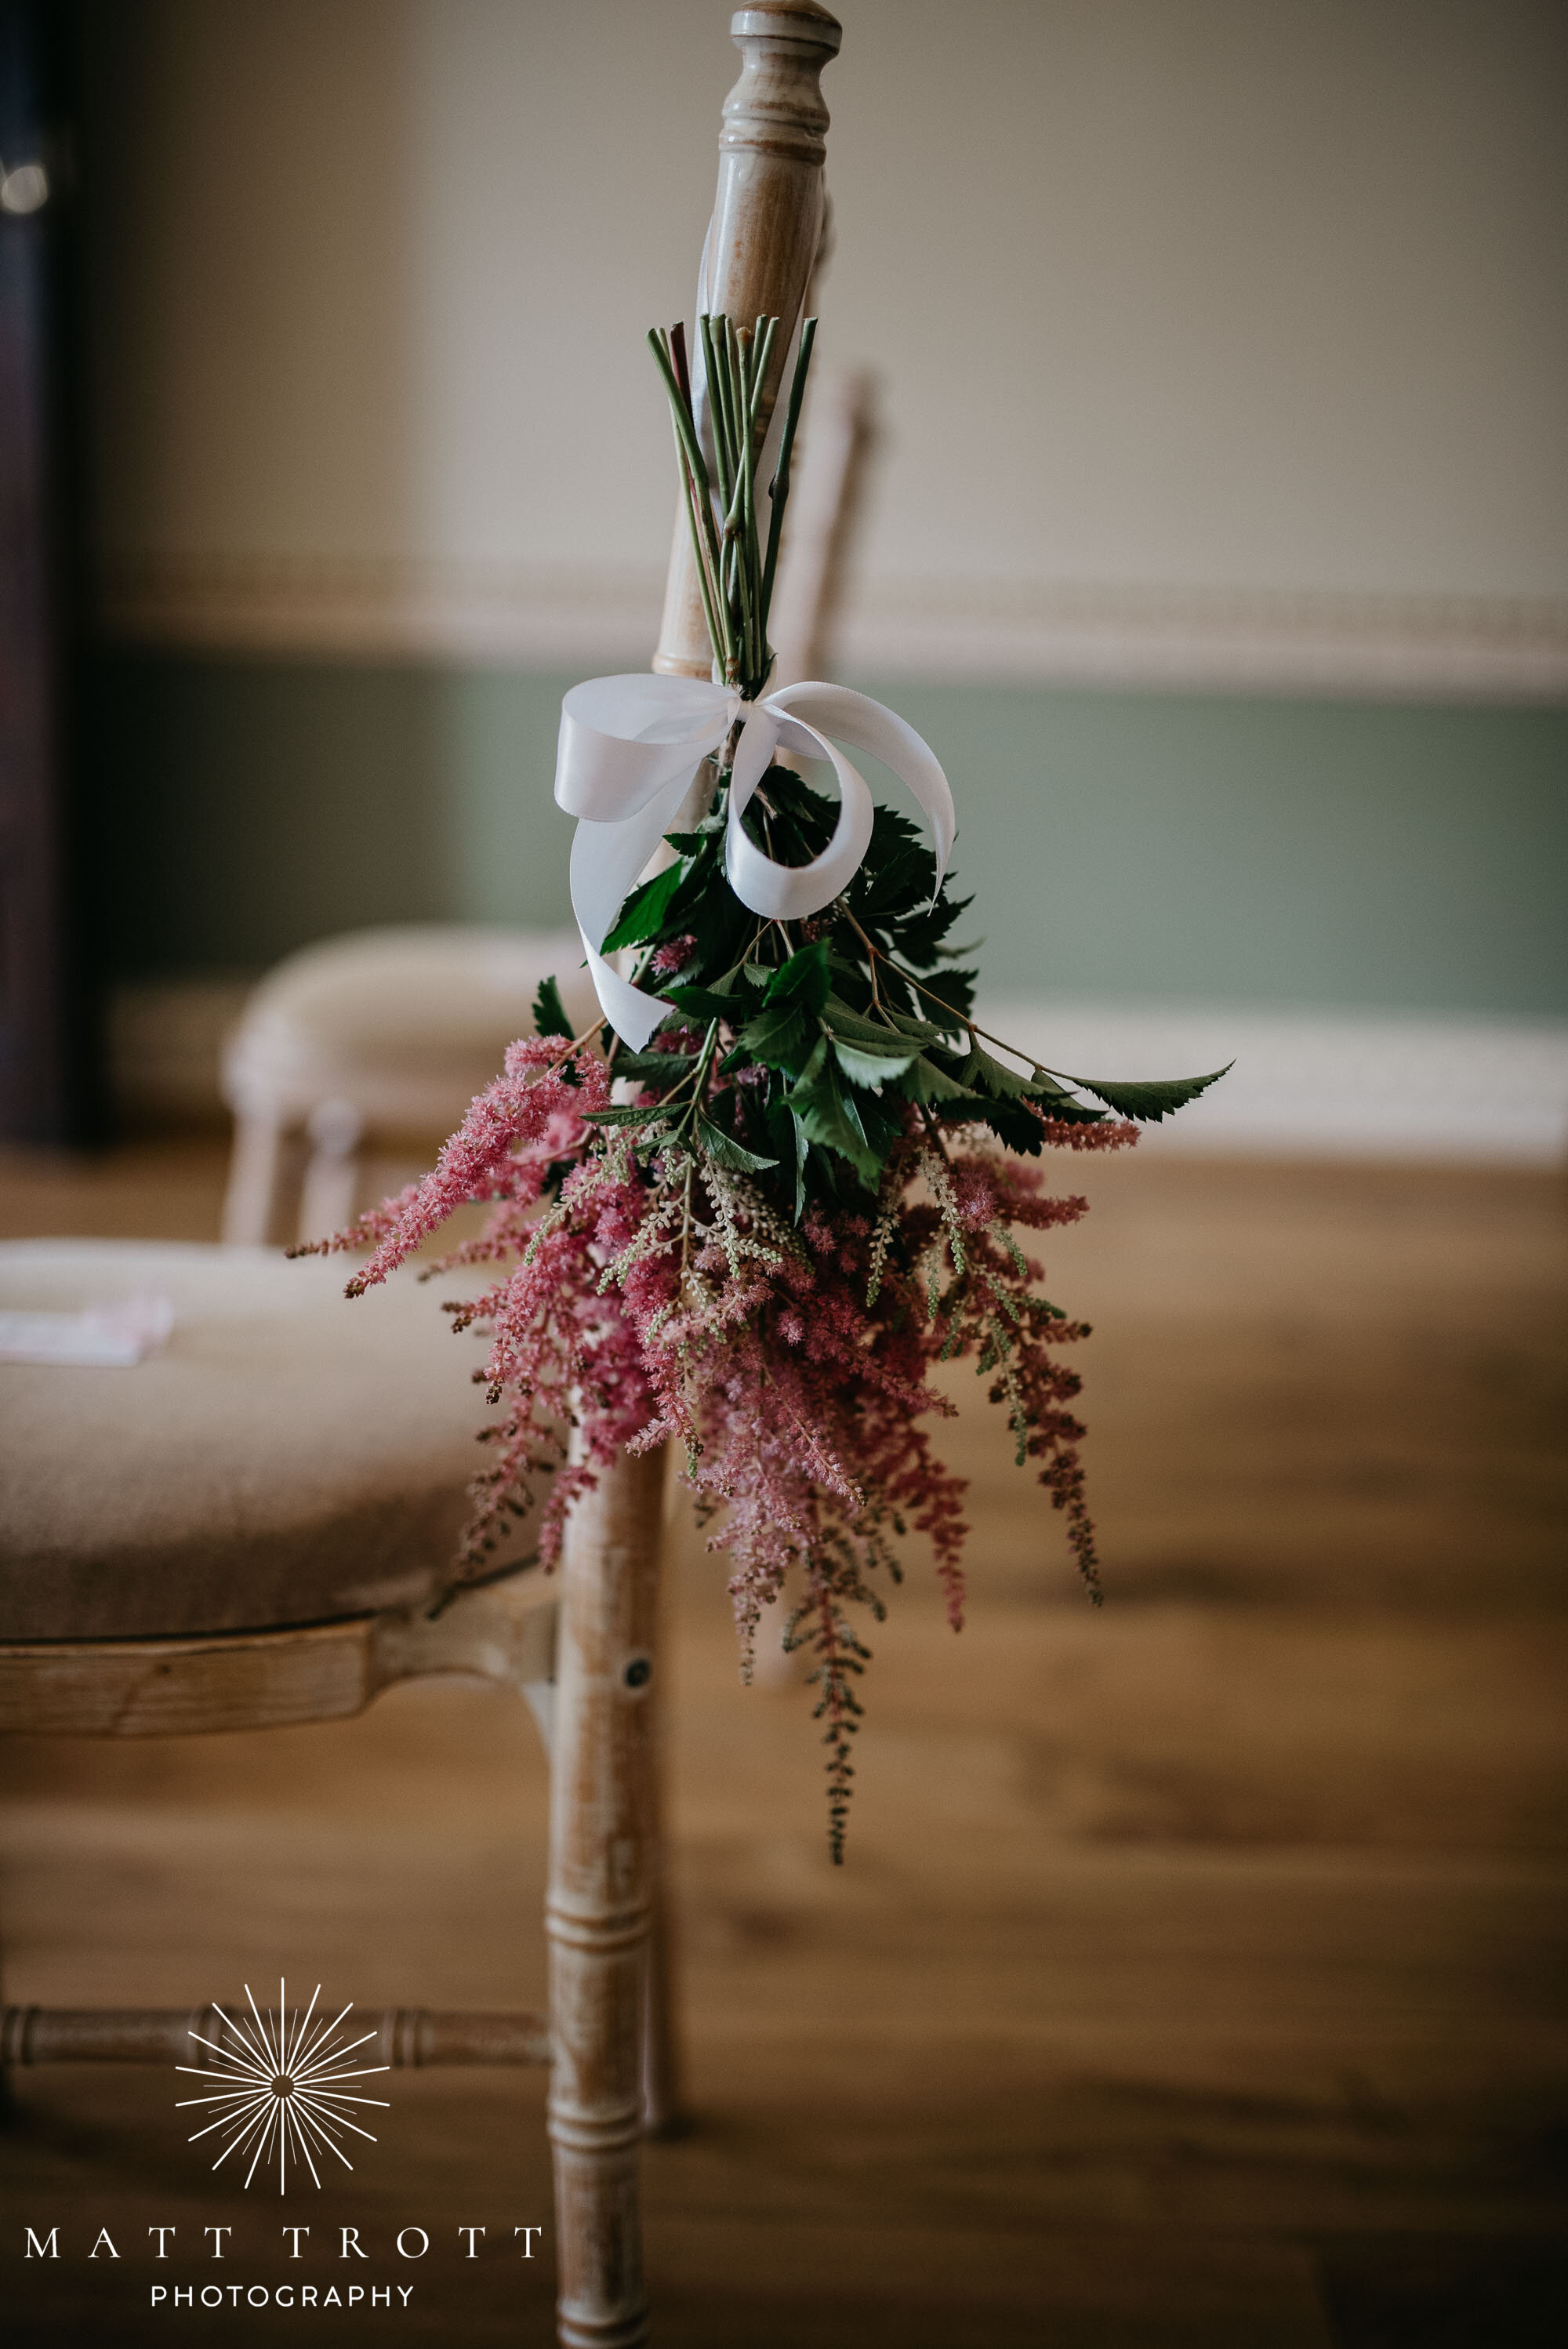 Upside down ceremony flowers during wedding ceremony at bradbourne house